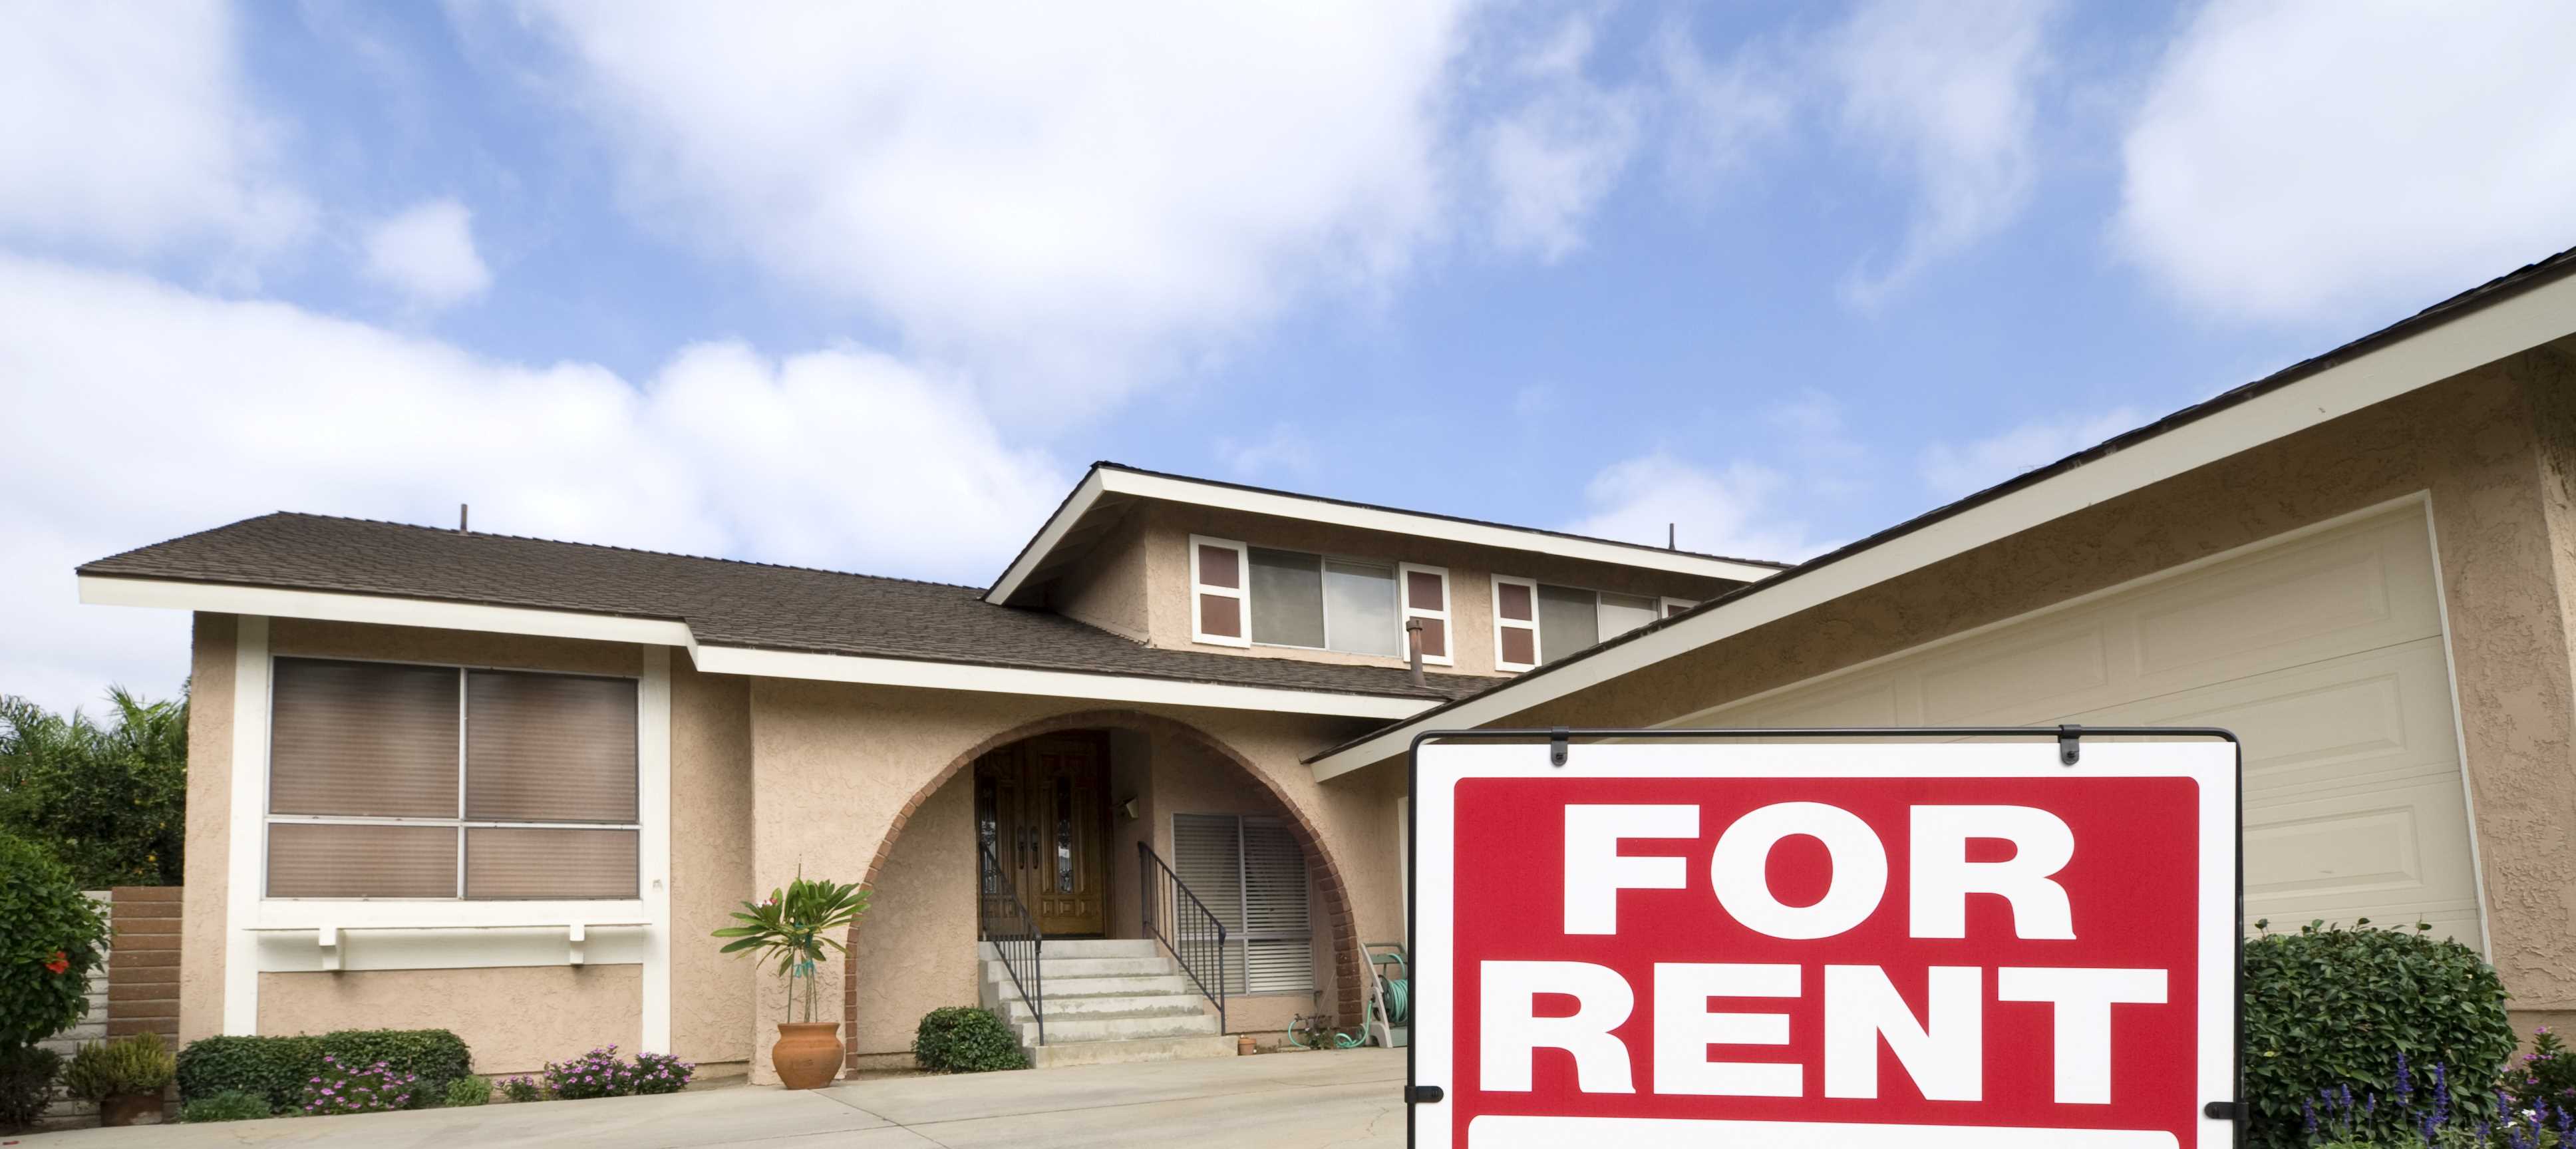 IRS Allows Rental Real Estate To Be QBI Deduction - Missouri CPA